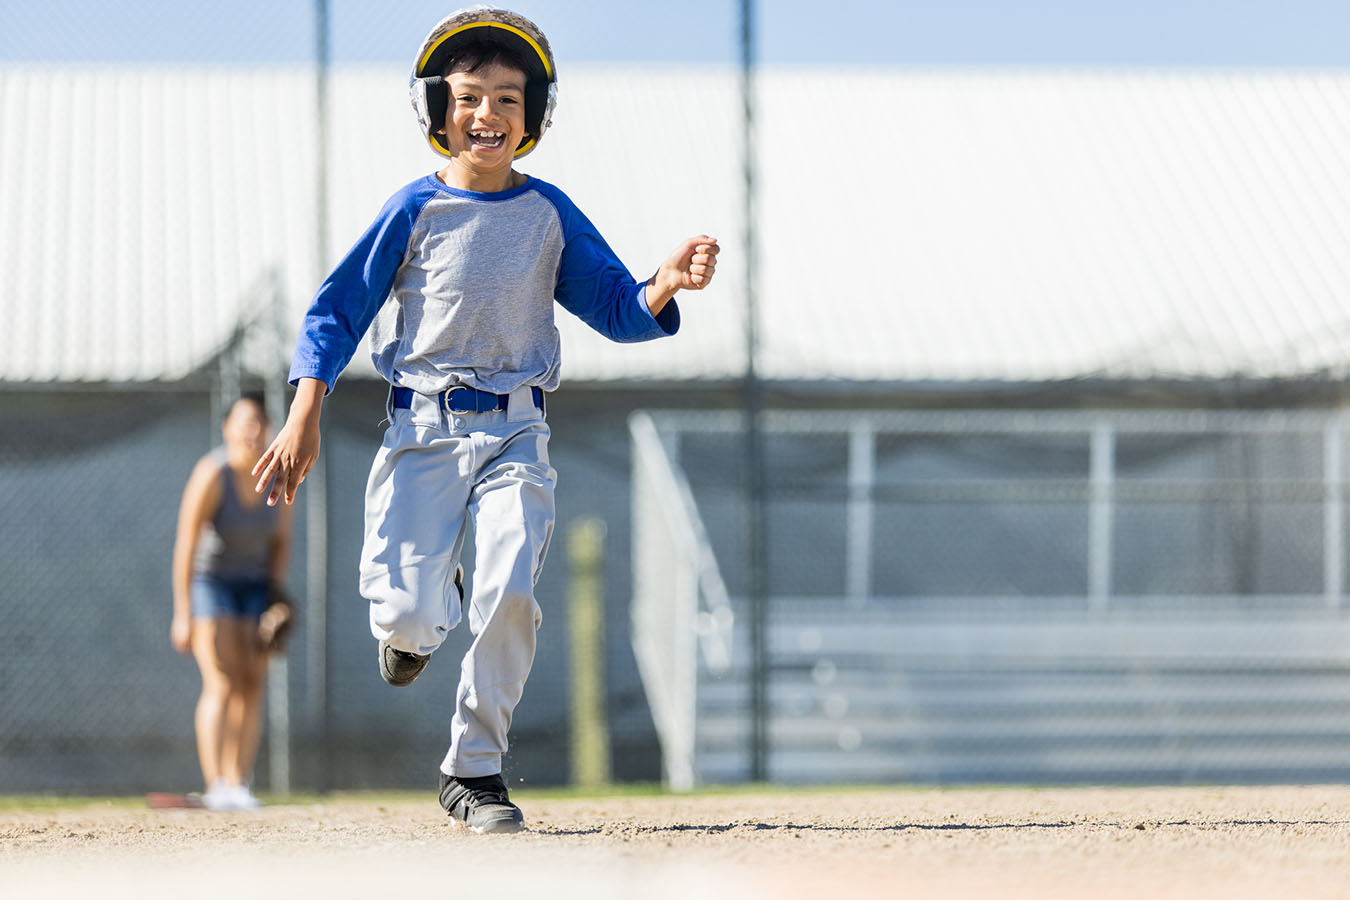 A joyous boy runs the bases in a baseball game.